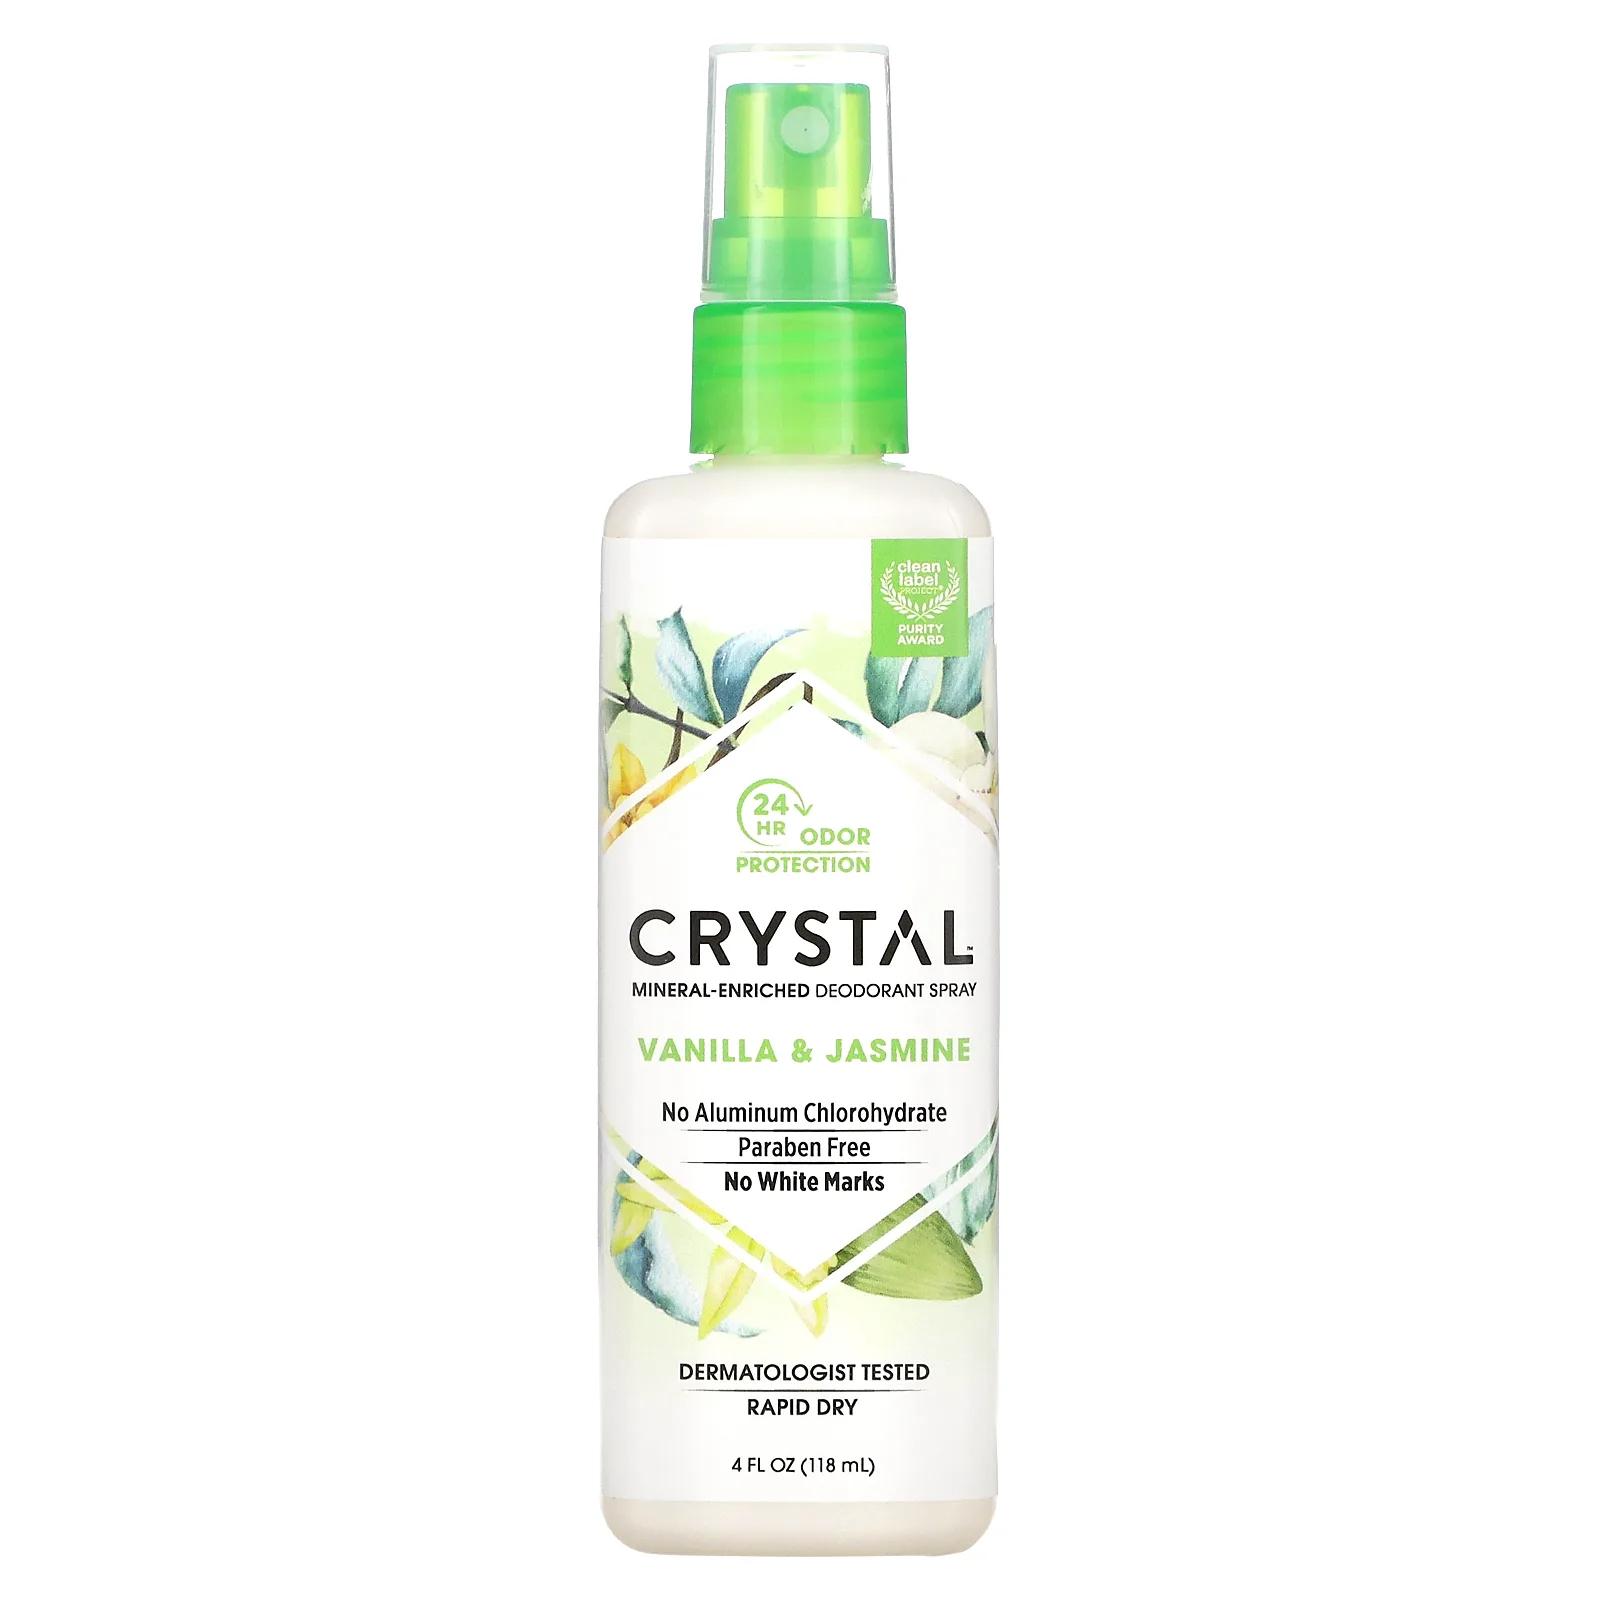 Crystal Body Deodorant Mineral Deodorant Spray Vanilla Jasmine 4 fl oz (118 ml)